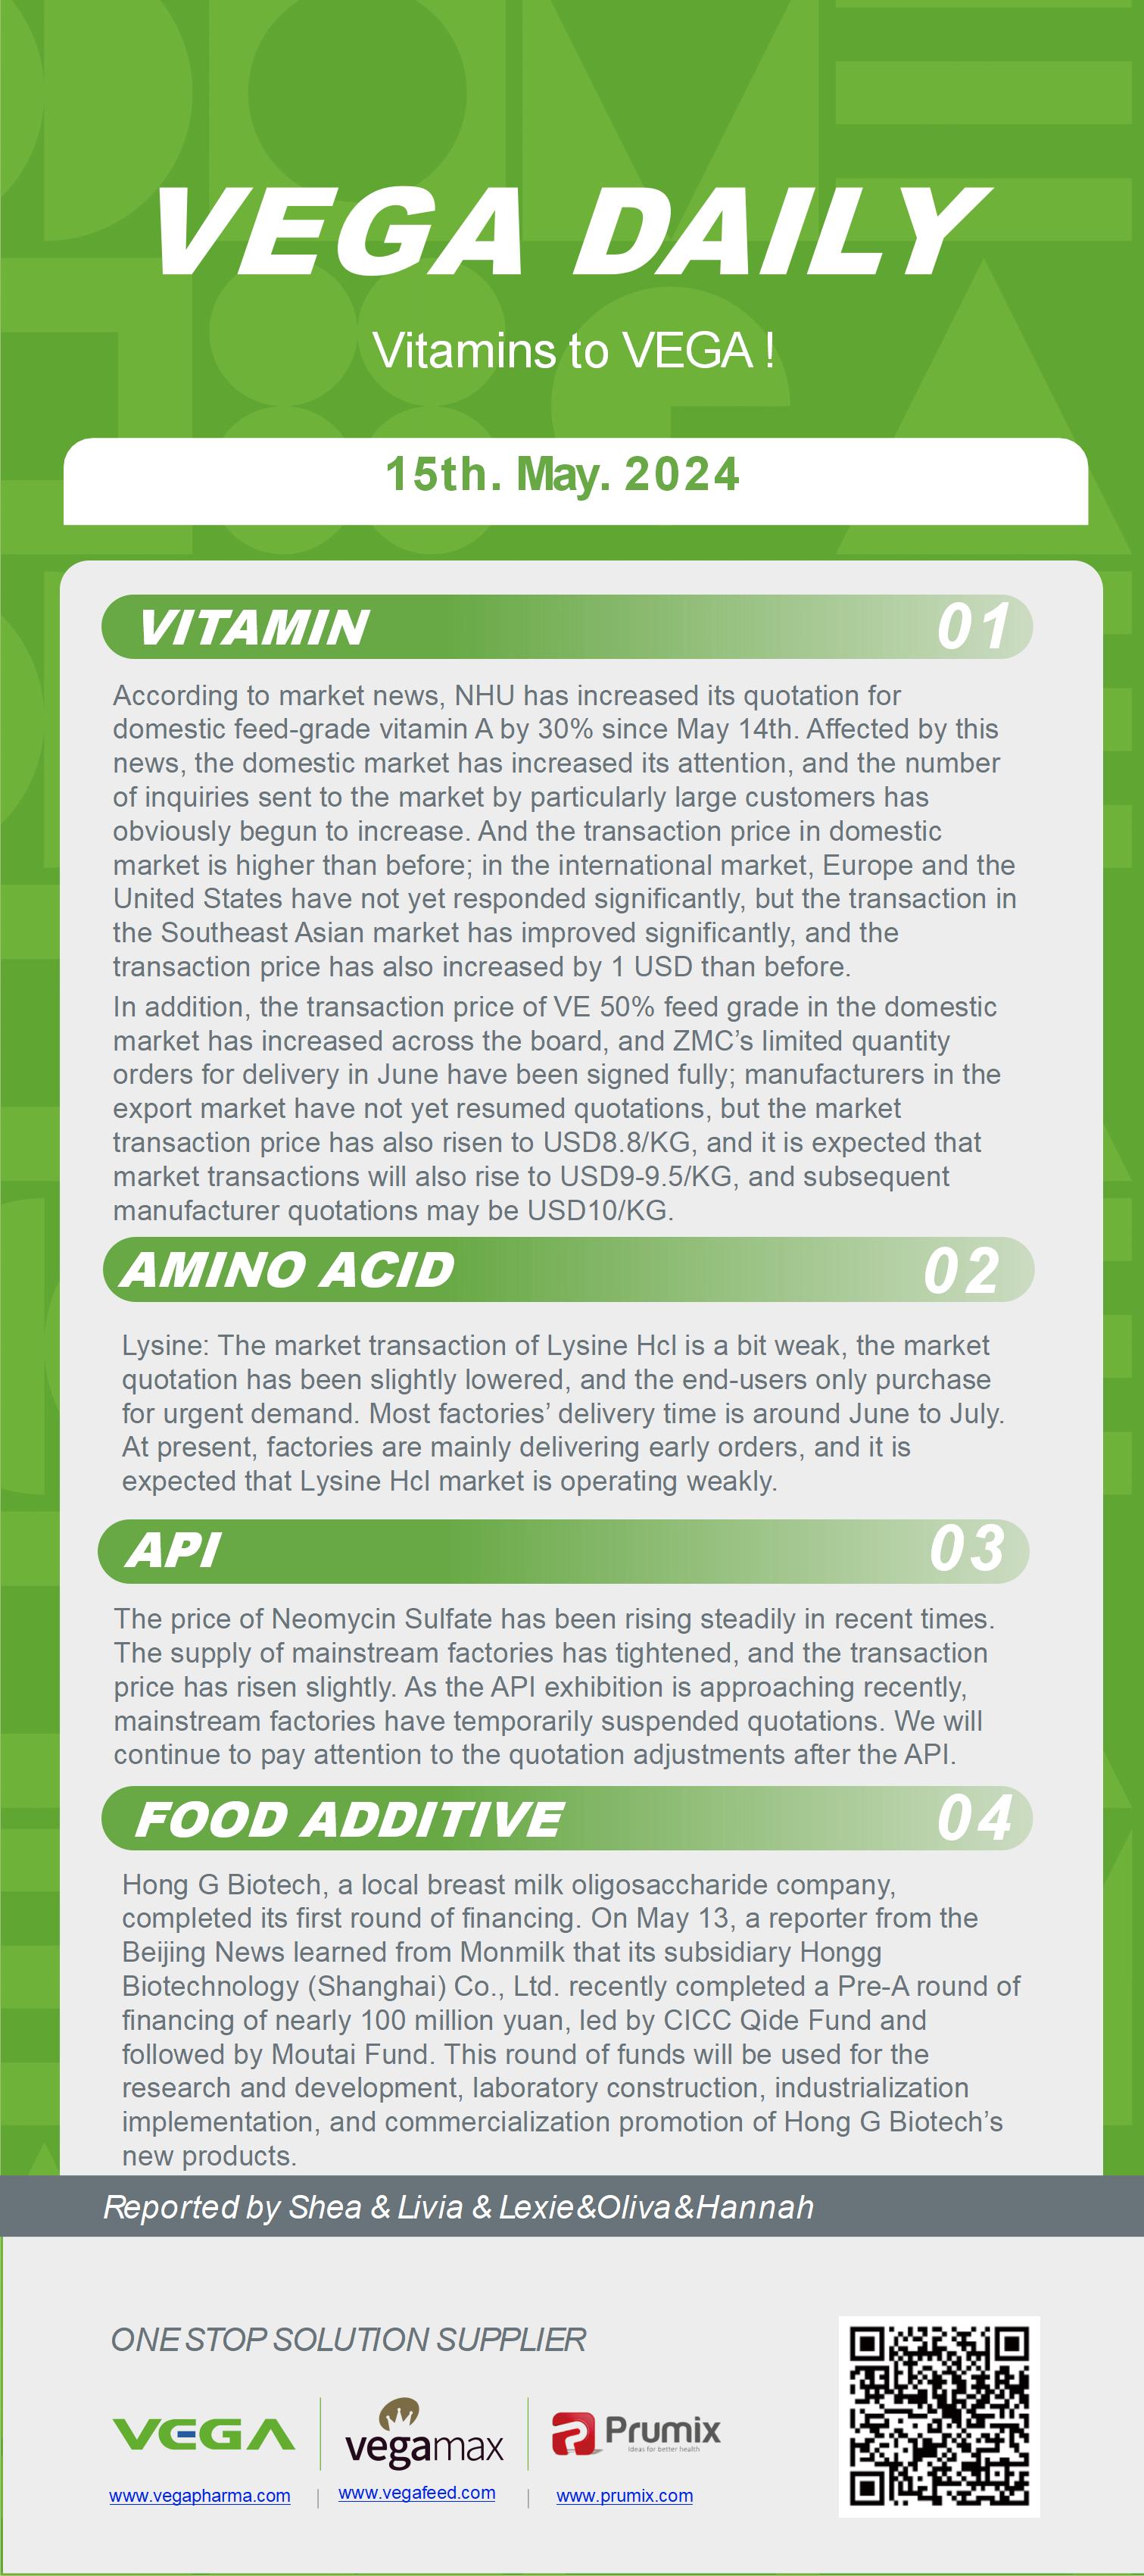 Vega Daily Dated on May 15th 2024 Vitamin Amino Acid APl Food Additives.jpg